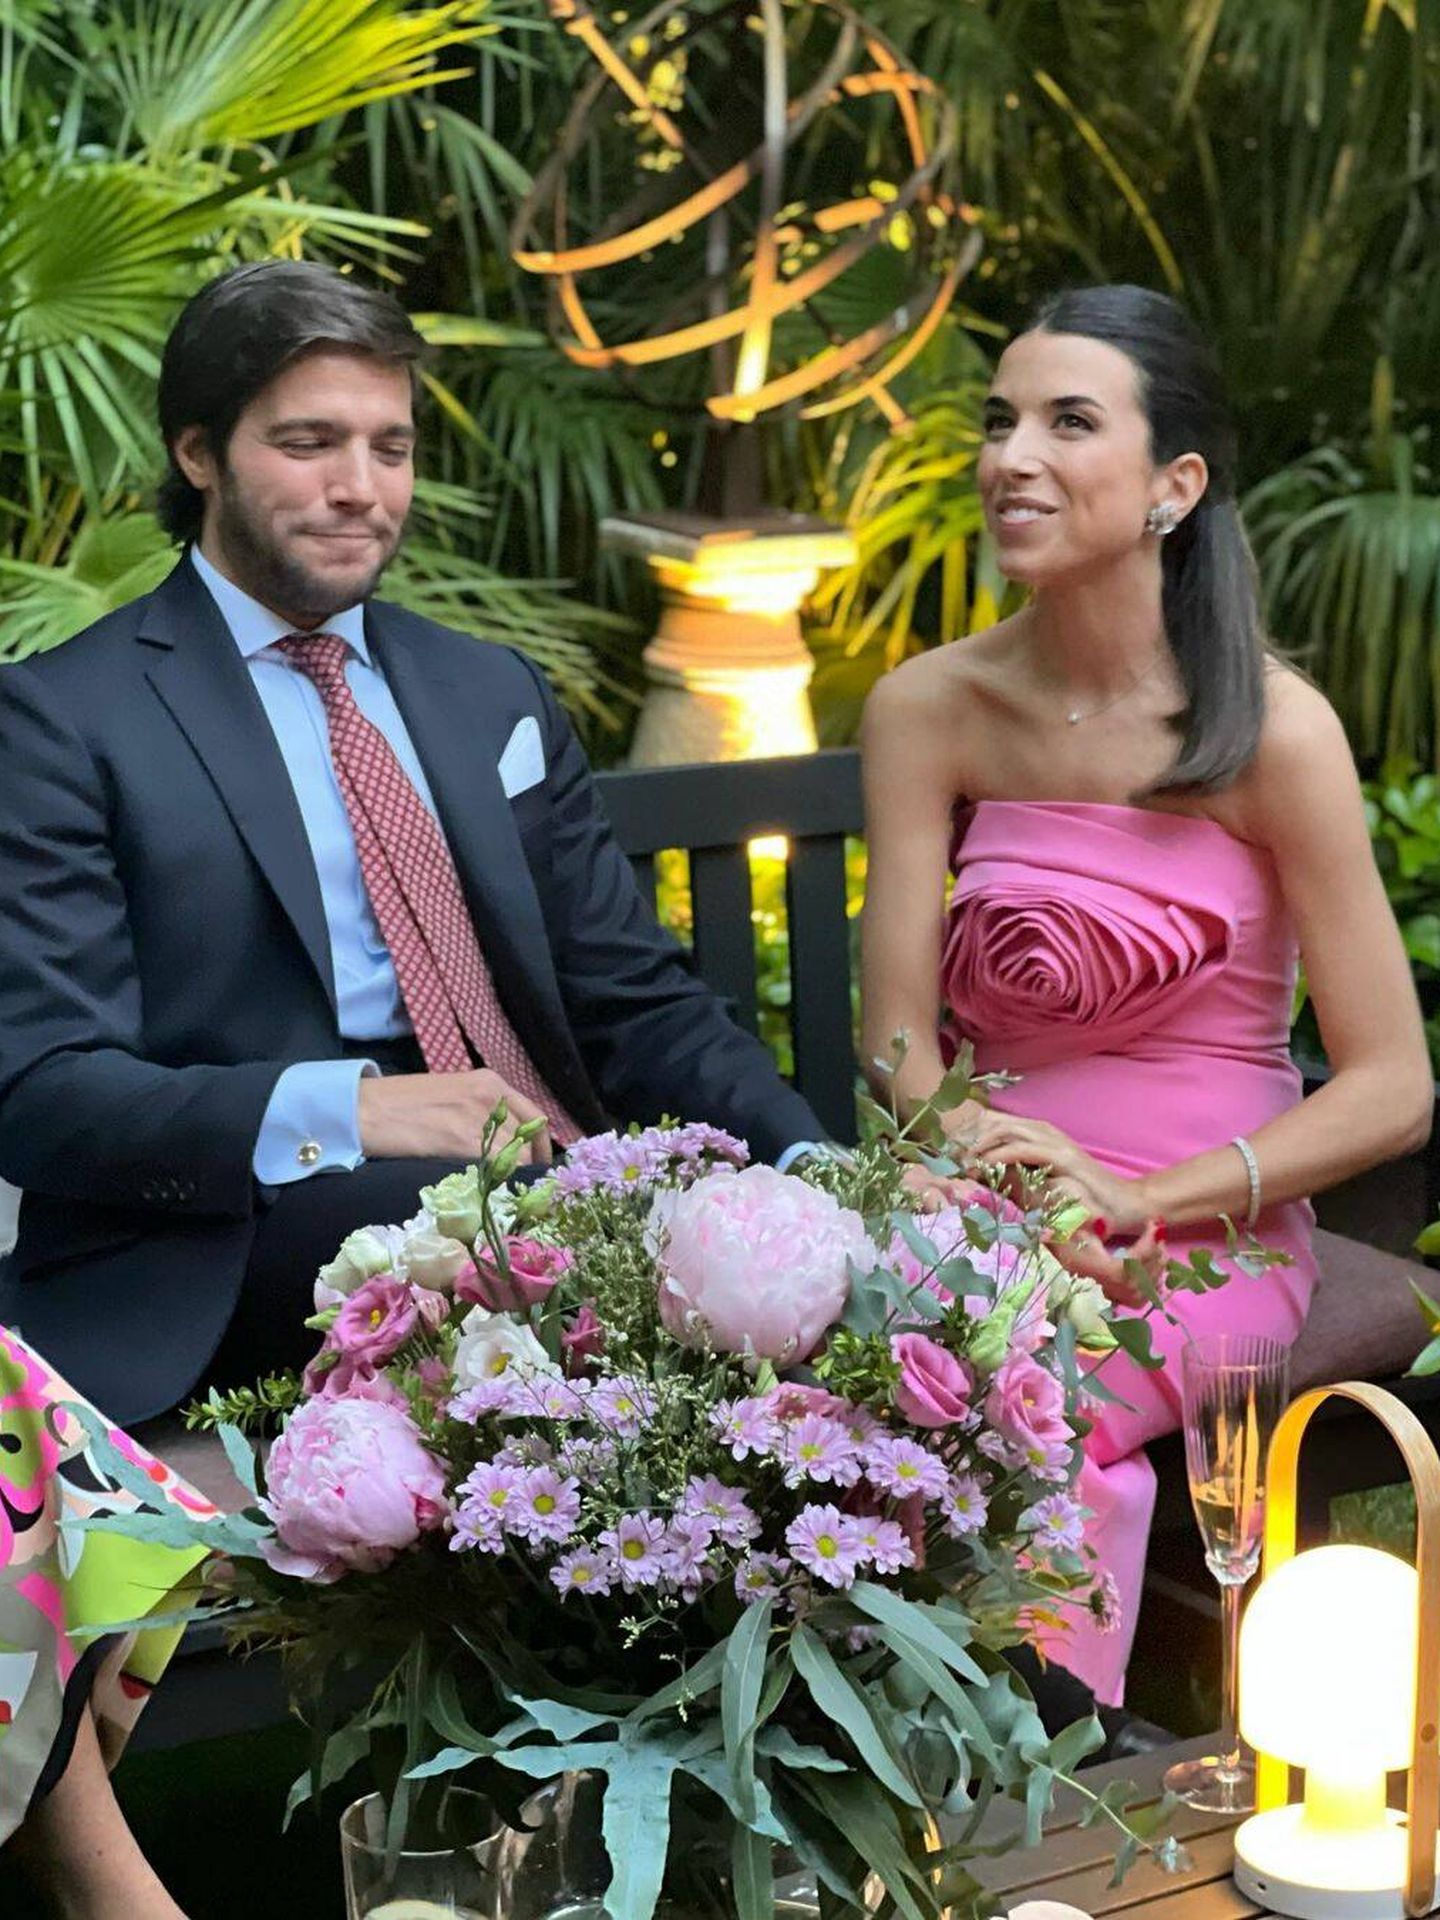 Laura Corsini junto a su futuro marido en su fiesta de pedida. (Instagram @bimani13)